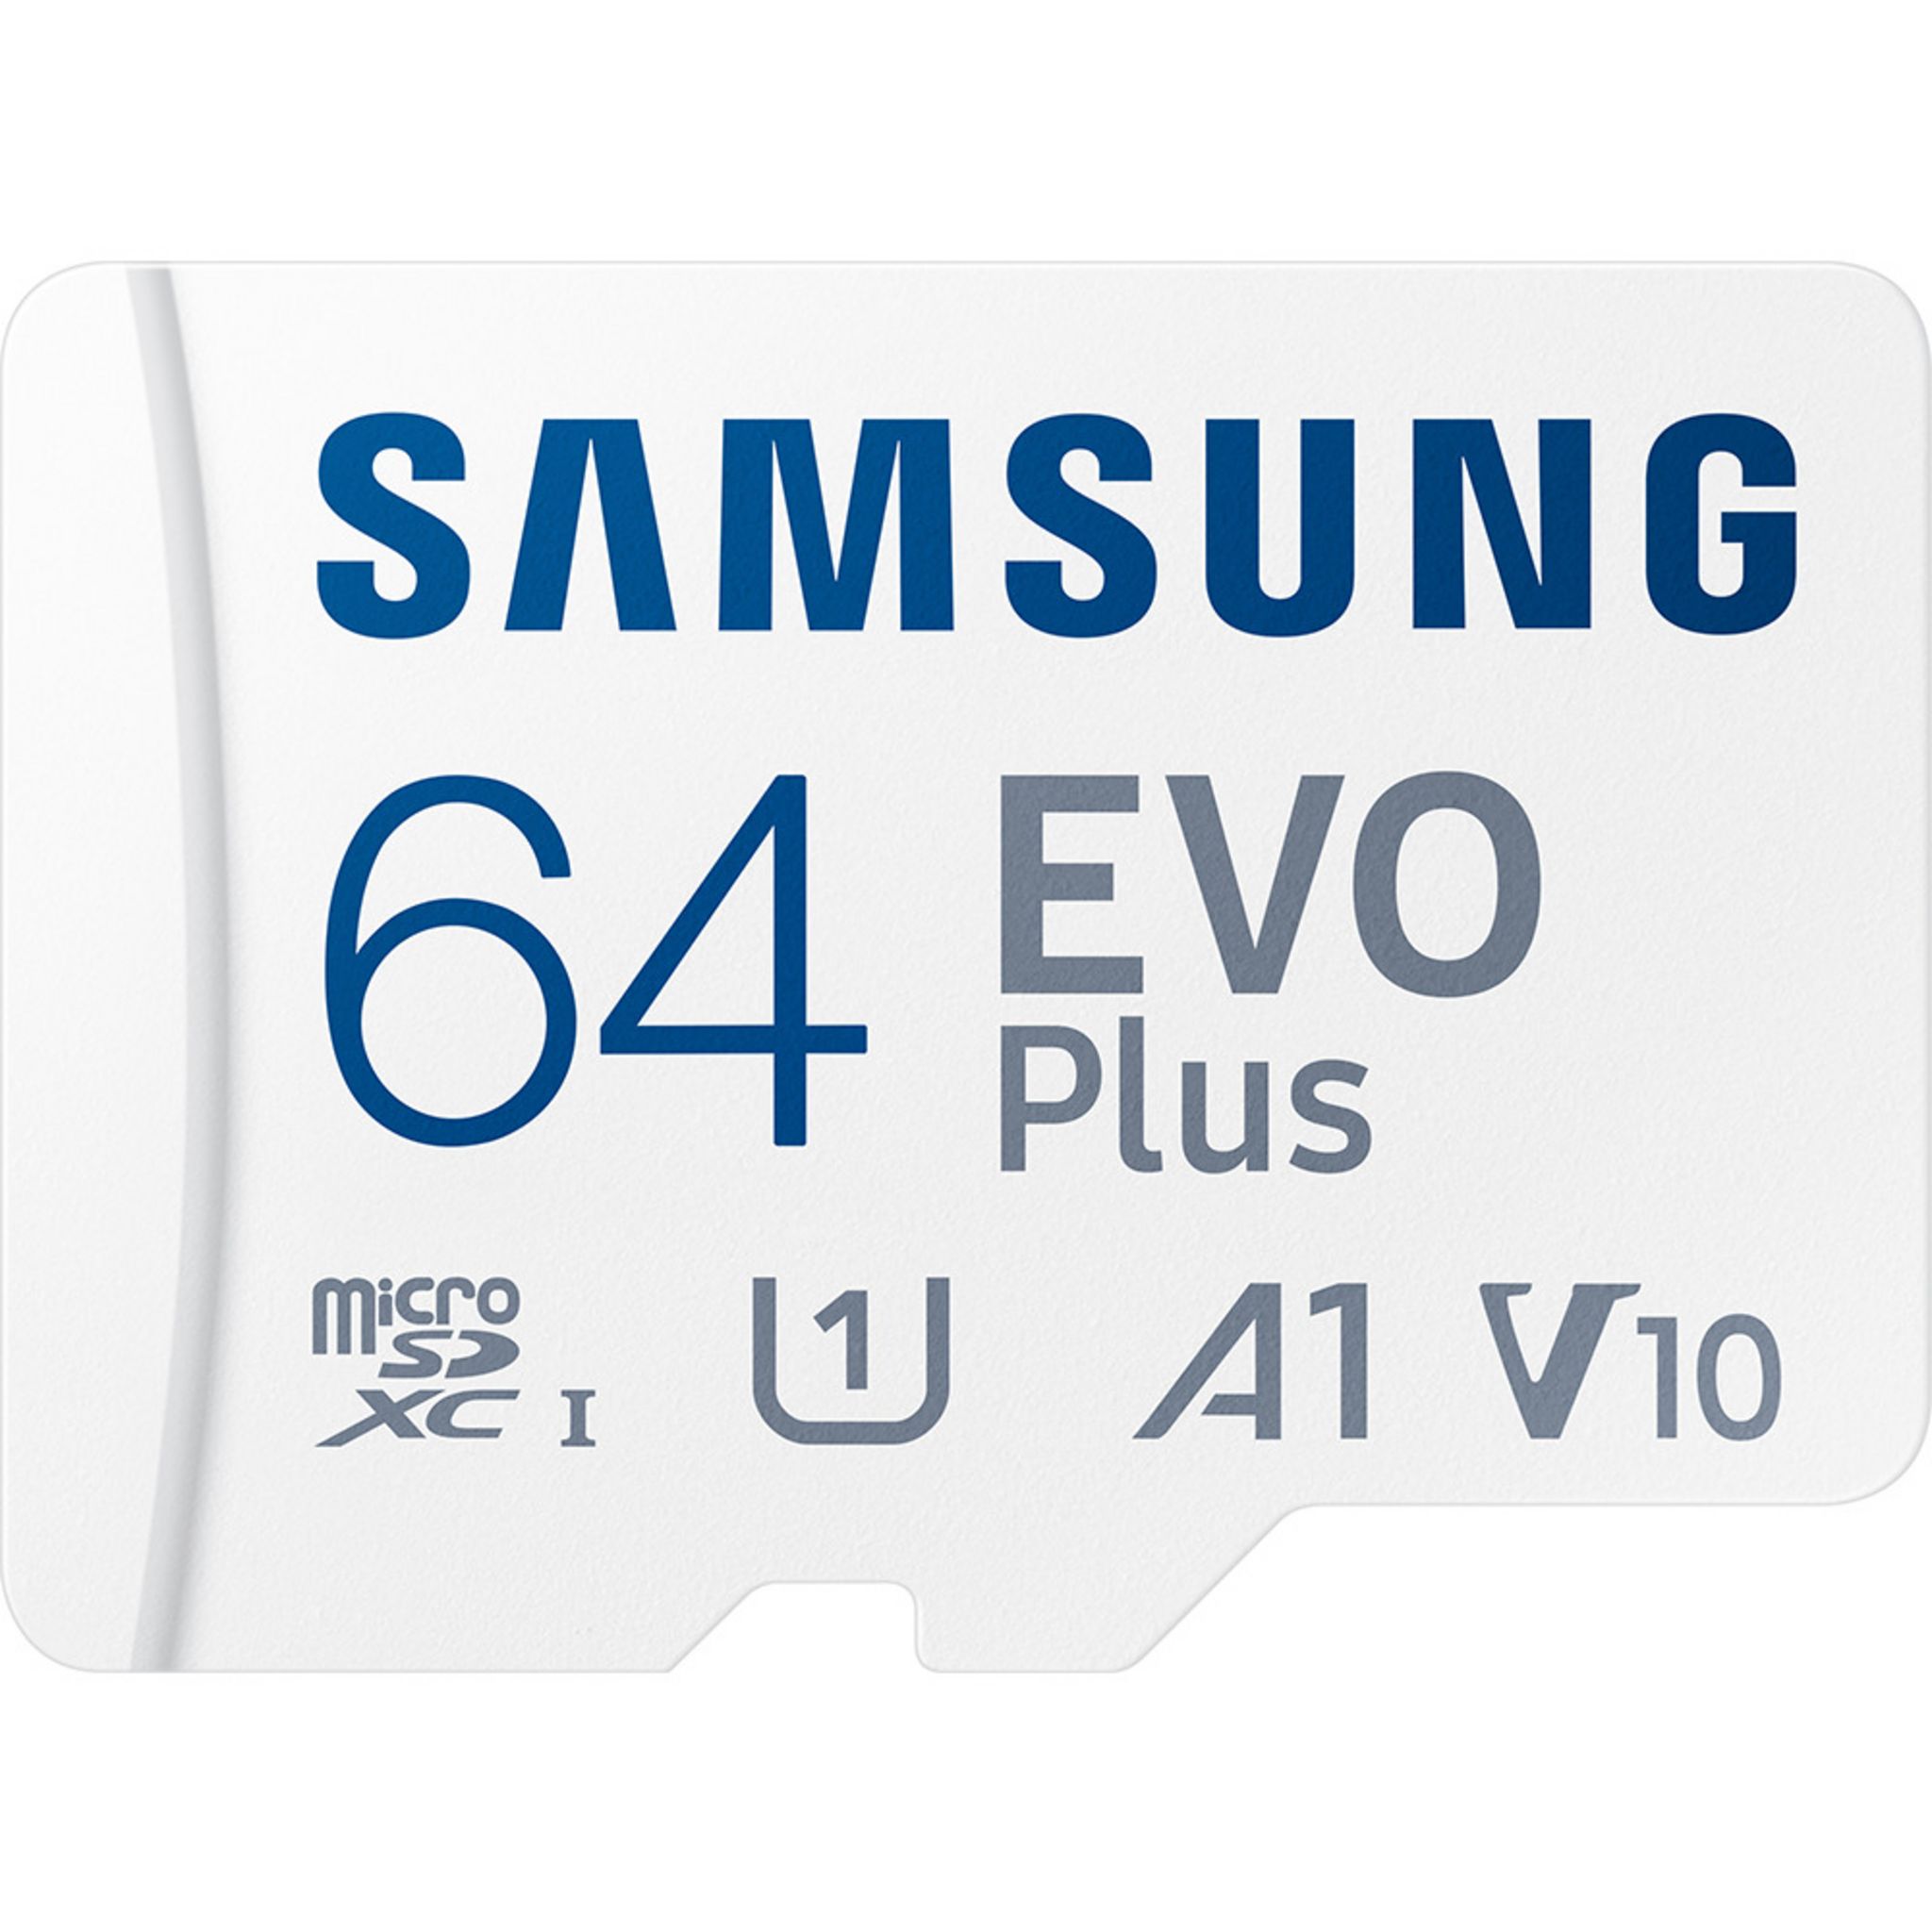 Samsung EVO Plus microSD 512 Go - Carte mémoire - Garantie 3 ans LDLC